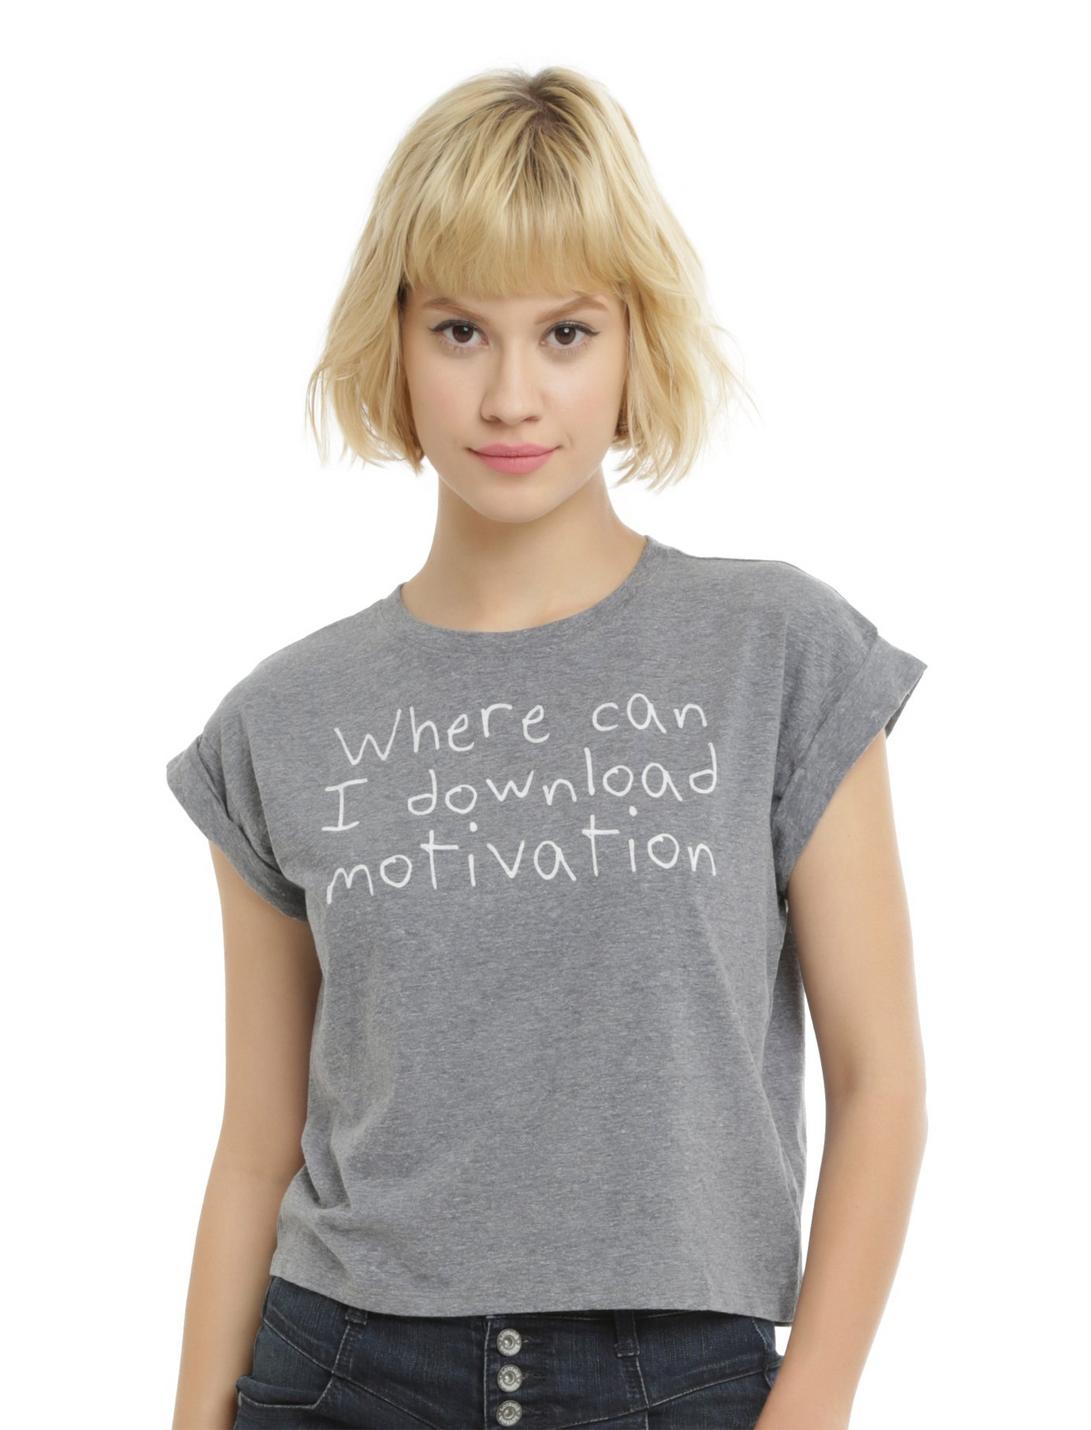 Download Motivation Crop Top, , hi-res